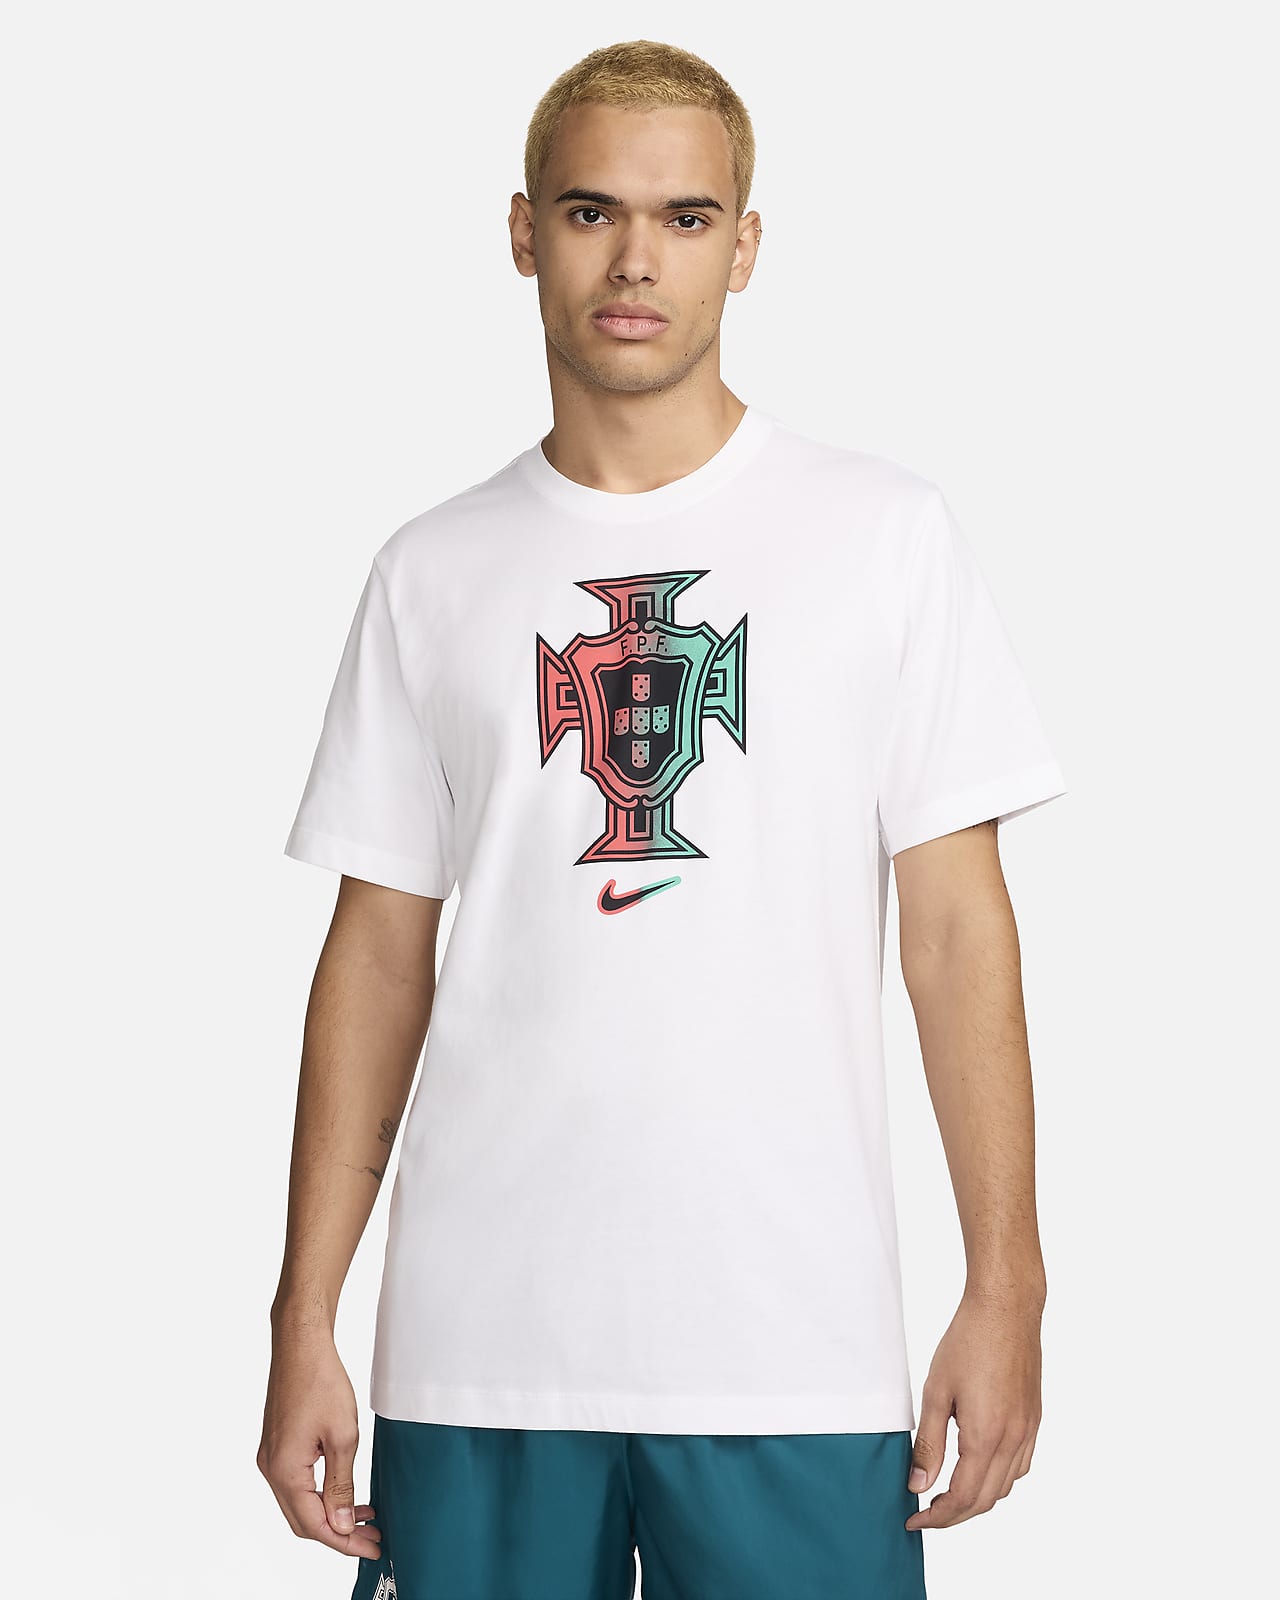 Portugal Men's Nike Football T-Shirt